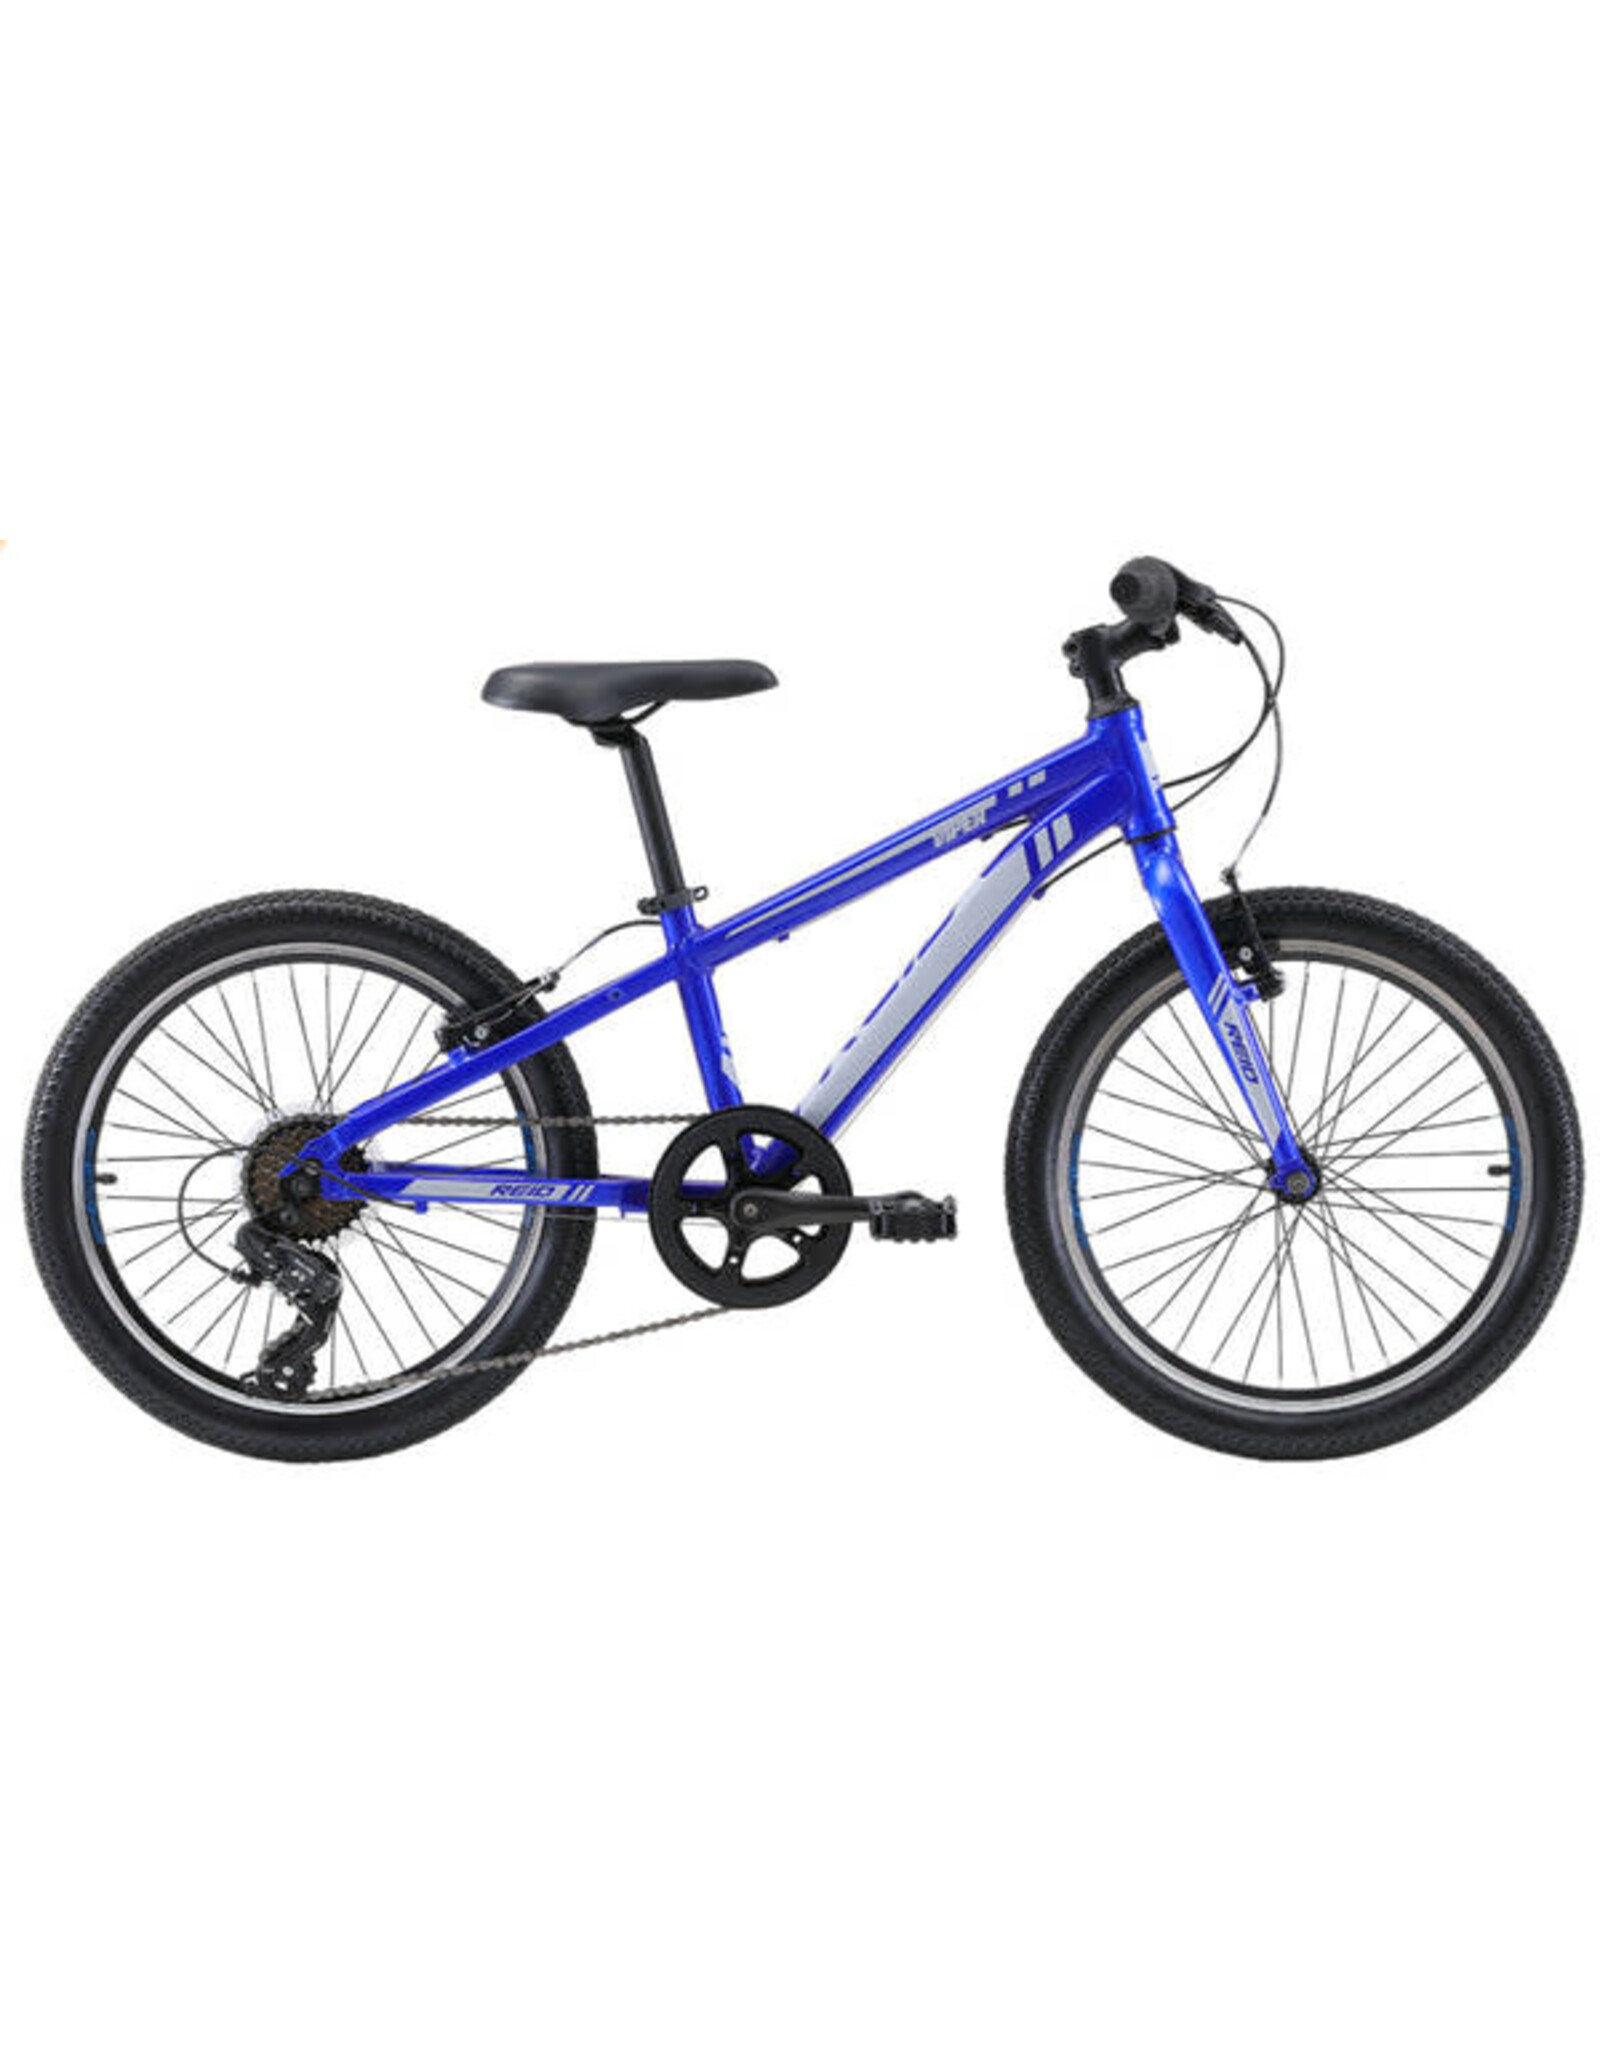 Reid Bikes VIPER 20"  BLUE 20